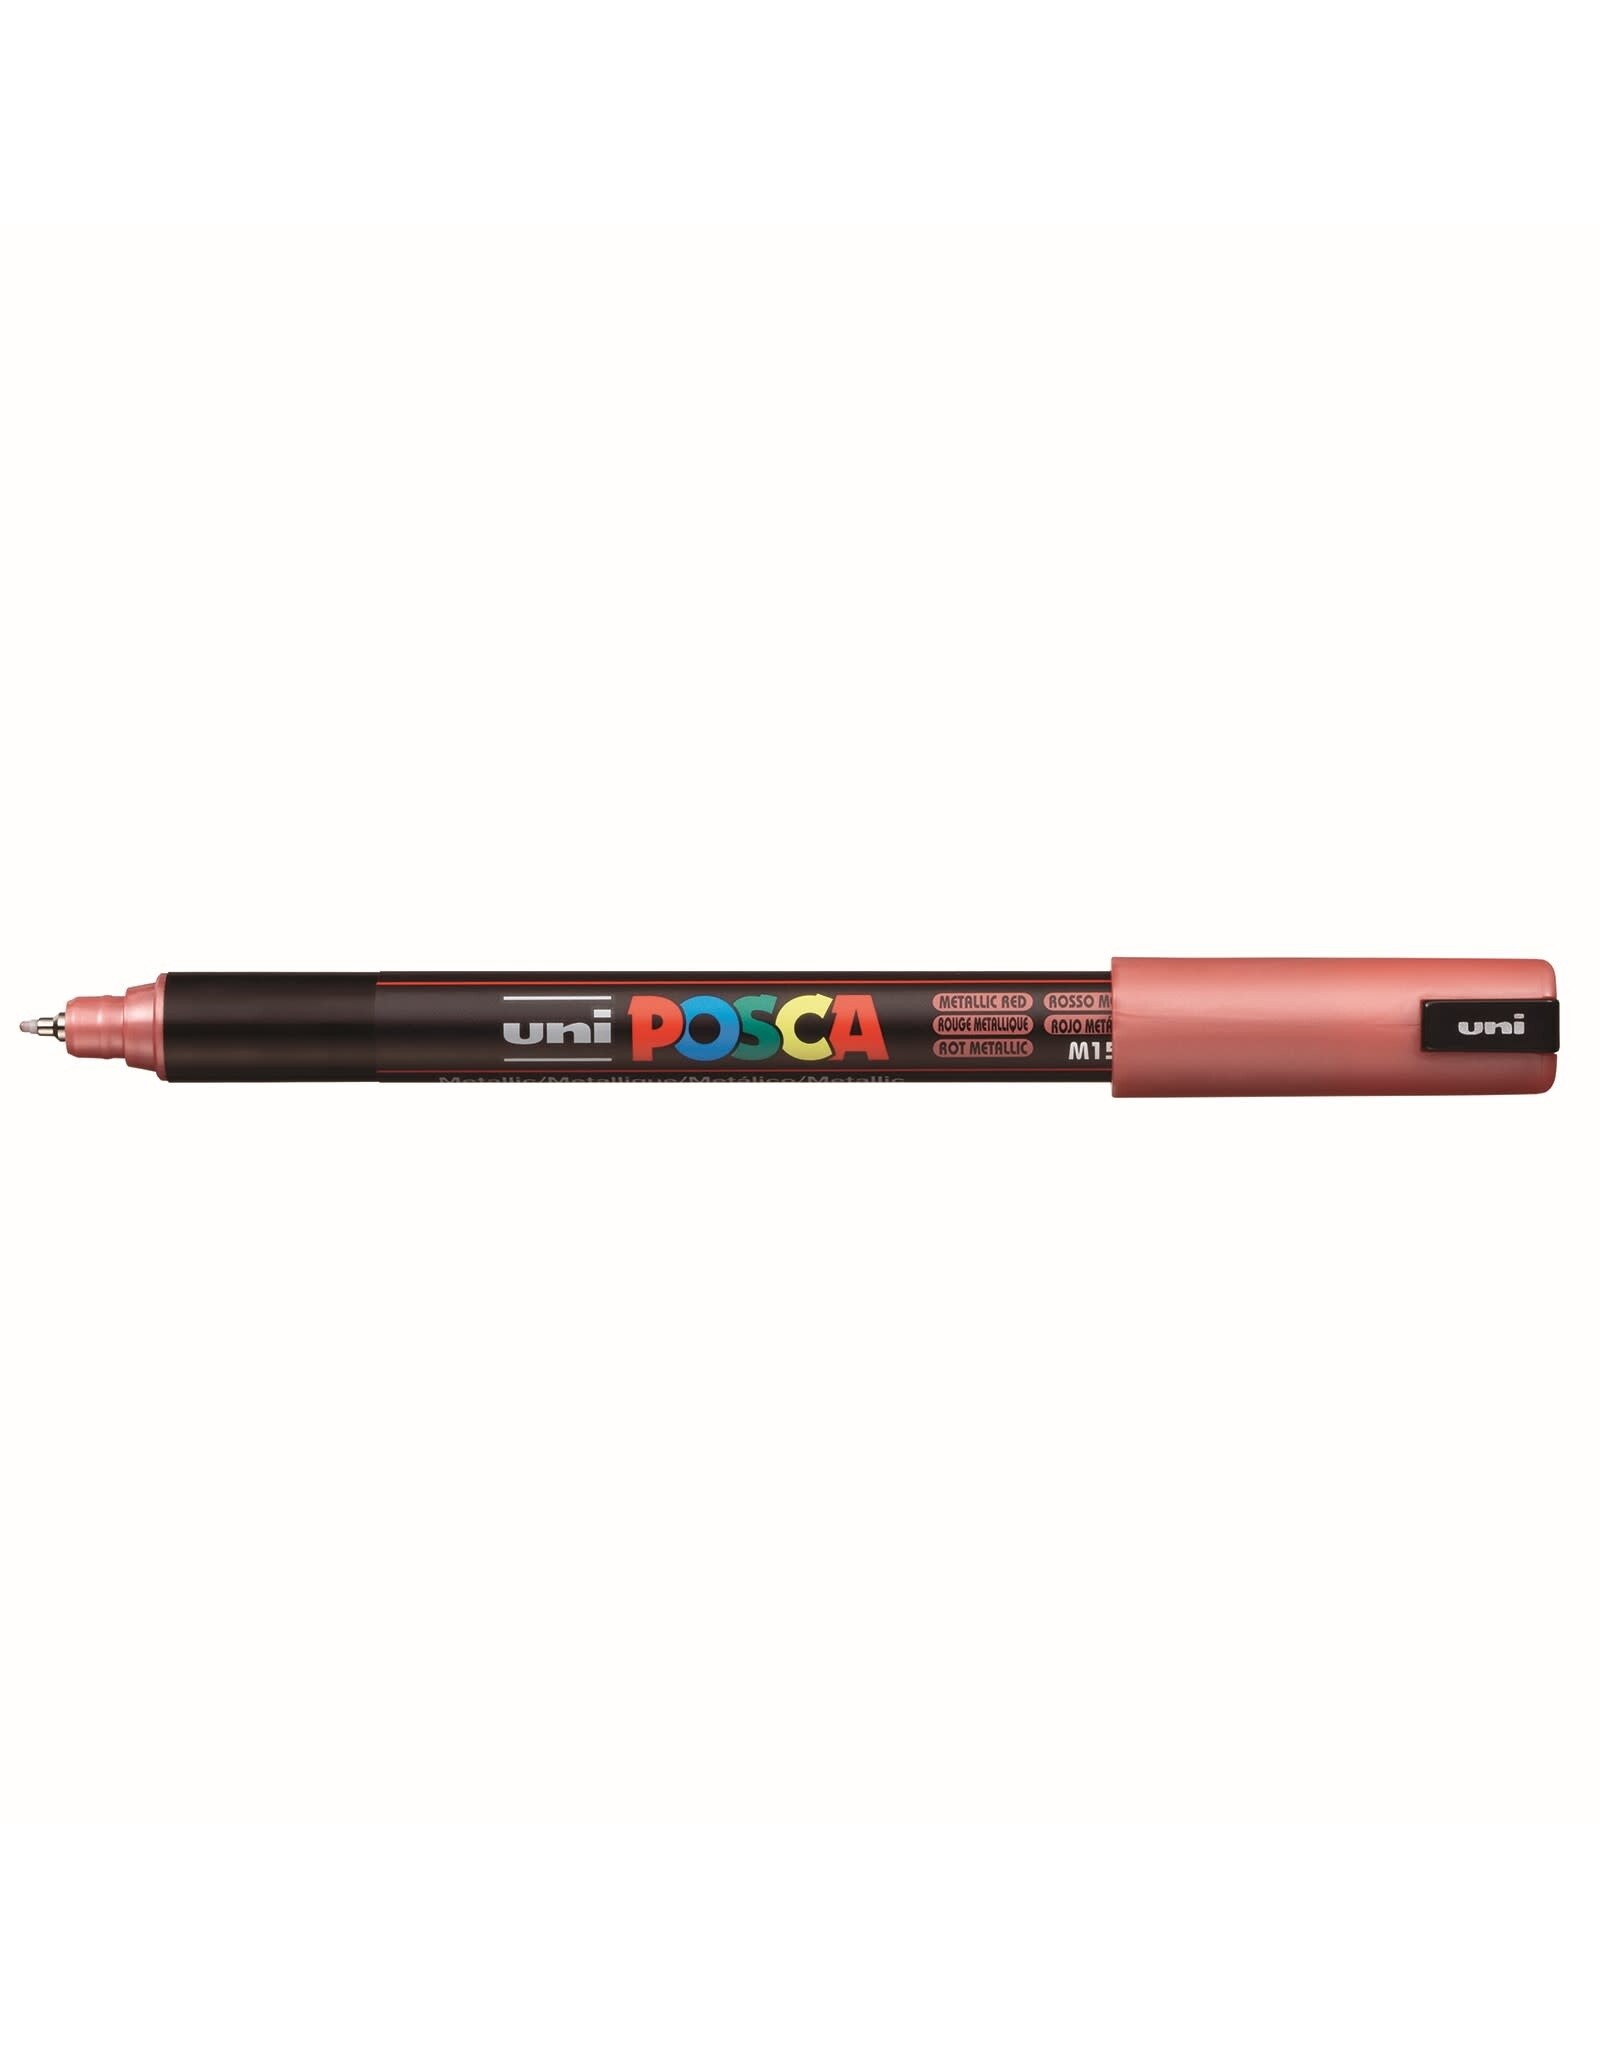 POSCA Uni POSCA Paint Marker, Extra Fine Metal Tip, Metallic Red